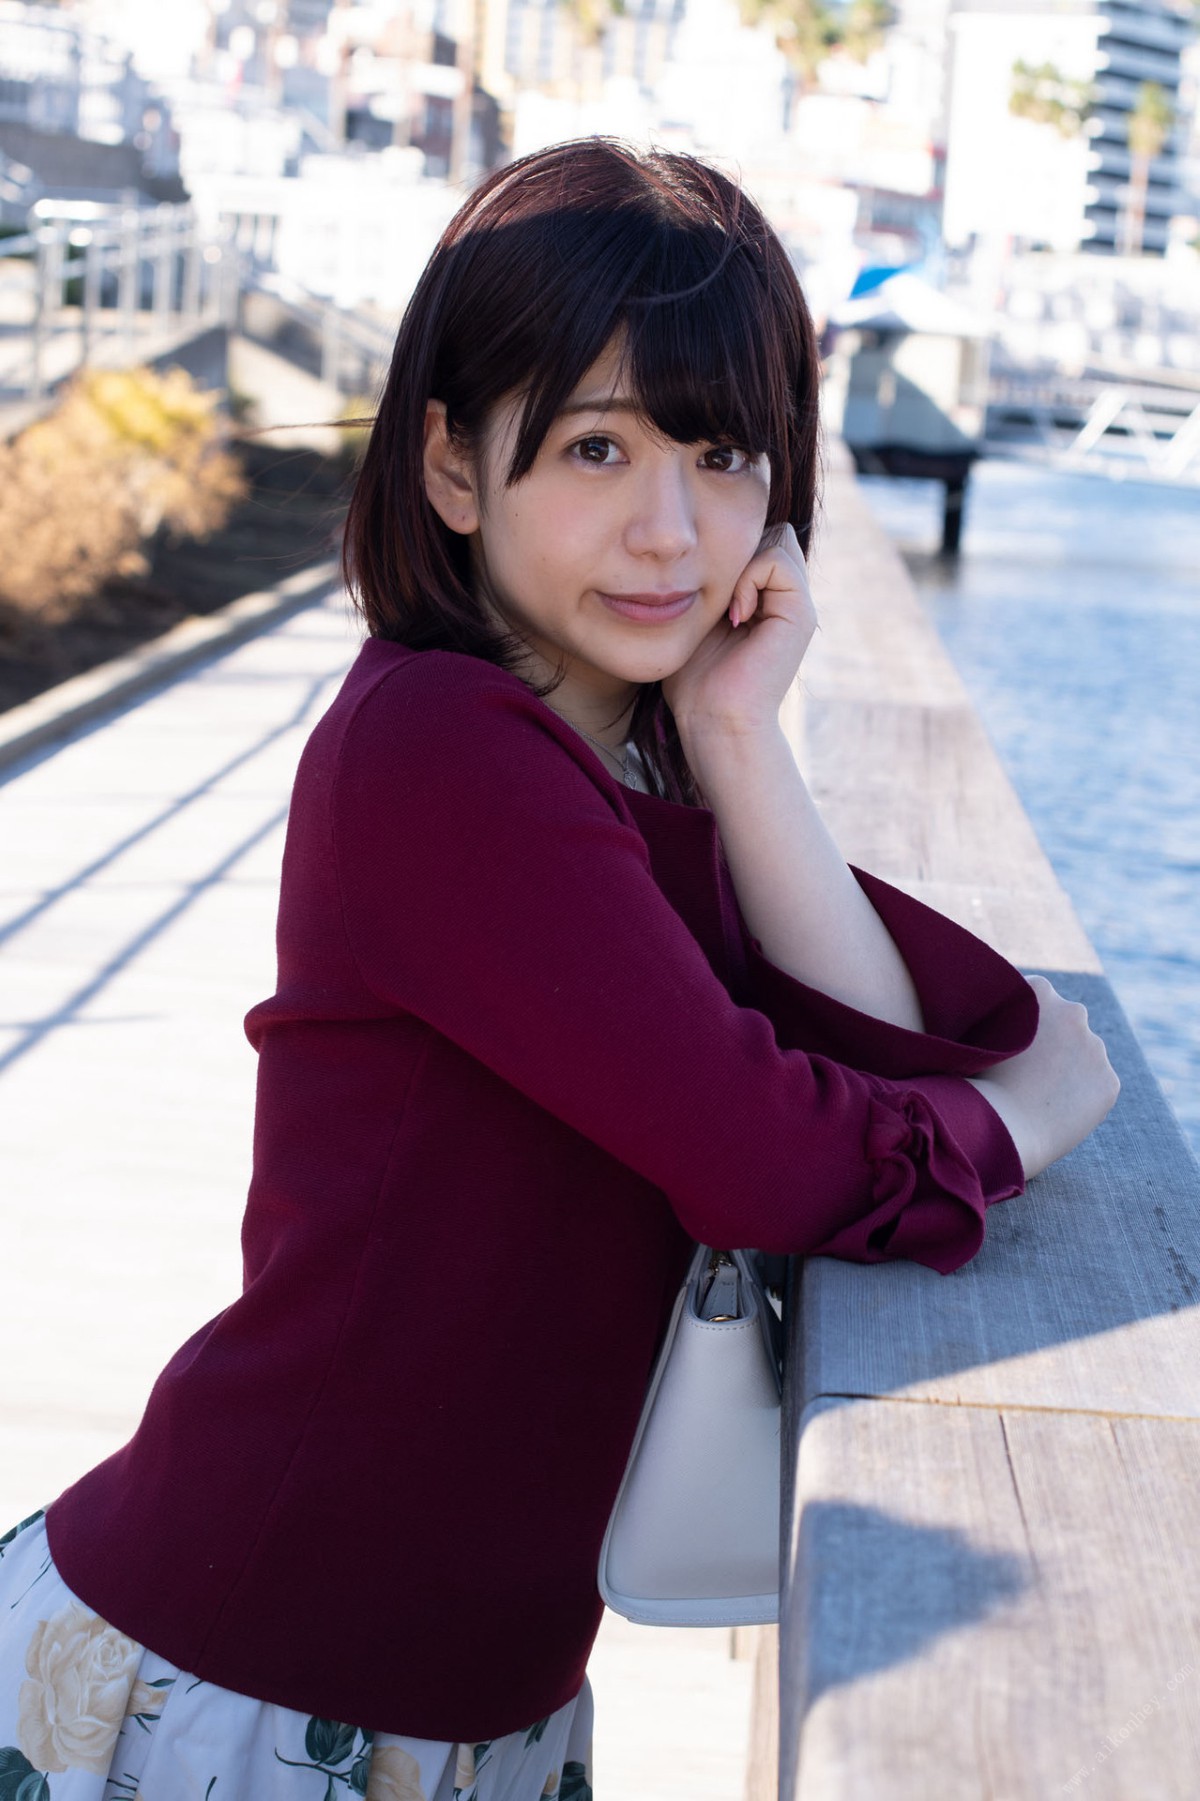 Photobook 2019 07 19 Asuna Kawai Maria Aine Nozomi Arimura 2 Days 1 Night Hot Spring Date 0051 2977816256.jpg